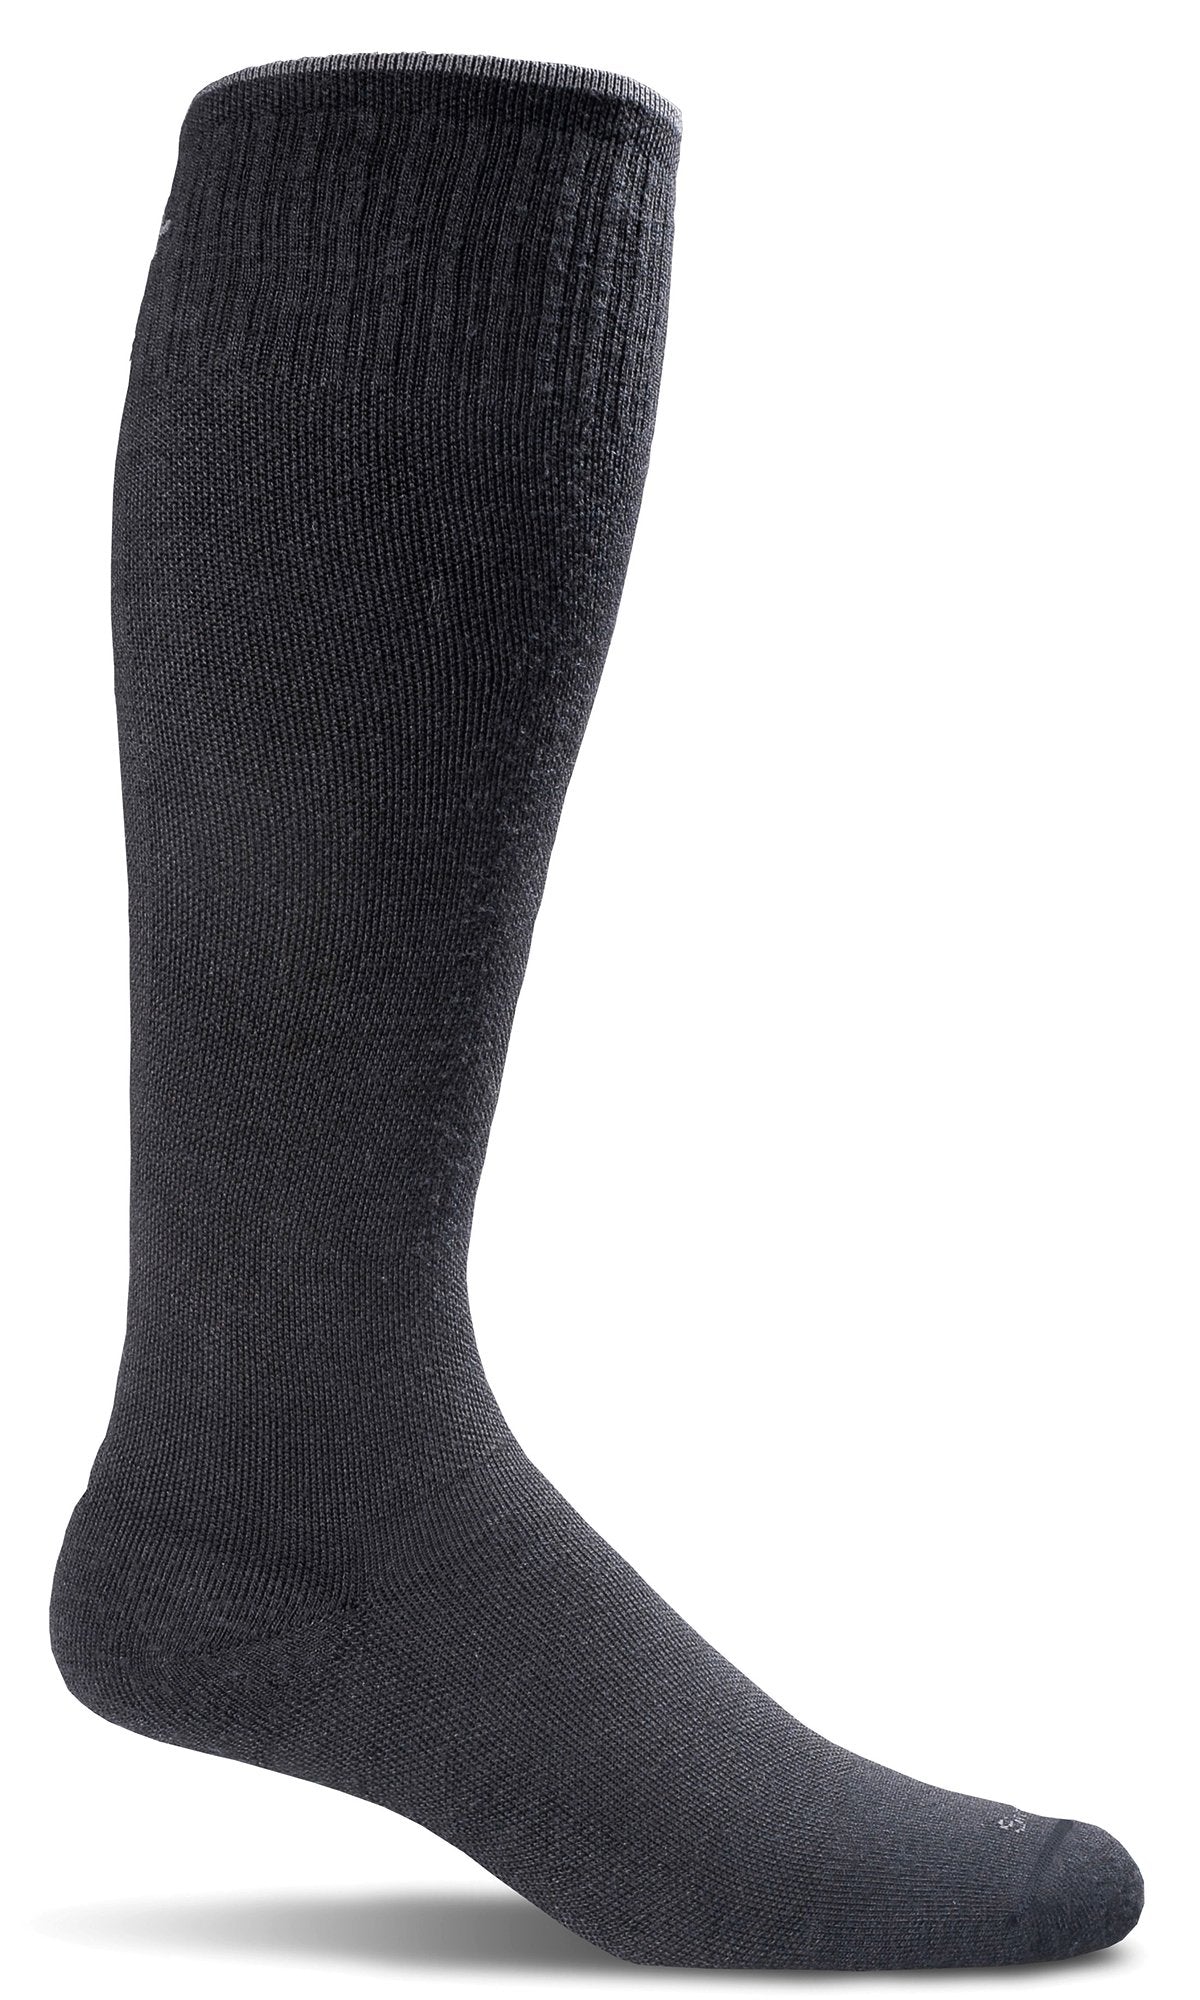 Sockwell Best-selling Men's Circulator Merino Wool Compression Socks in Black